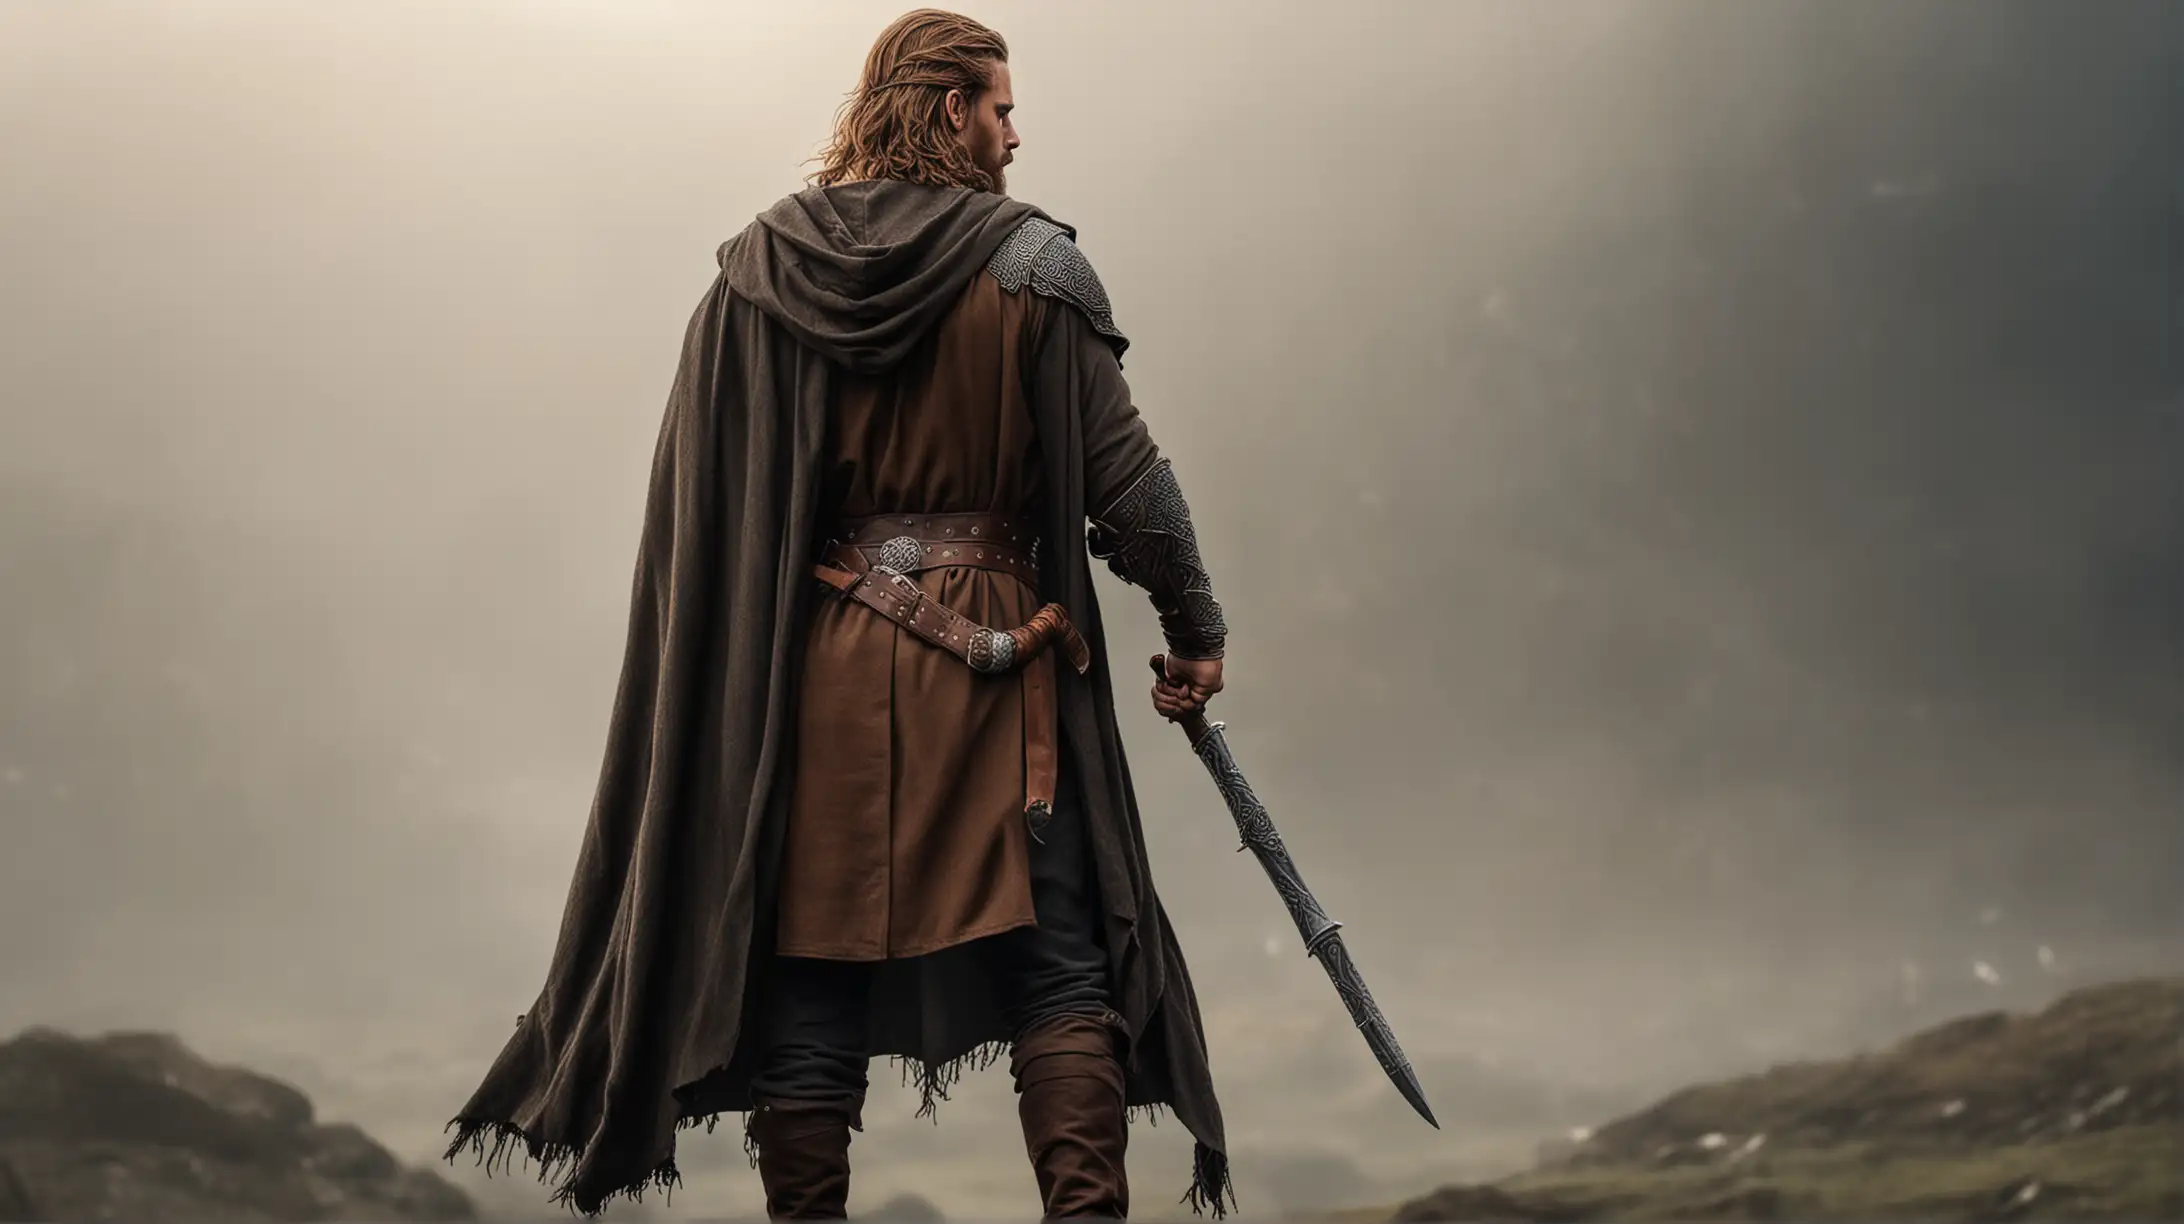 Majestic Viking Warrior BrownHaired Swordsman Gazing into the Horizon